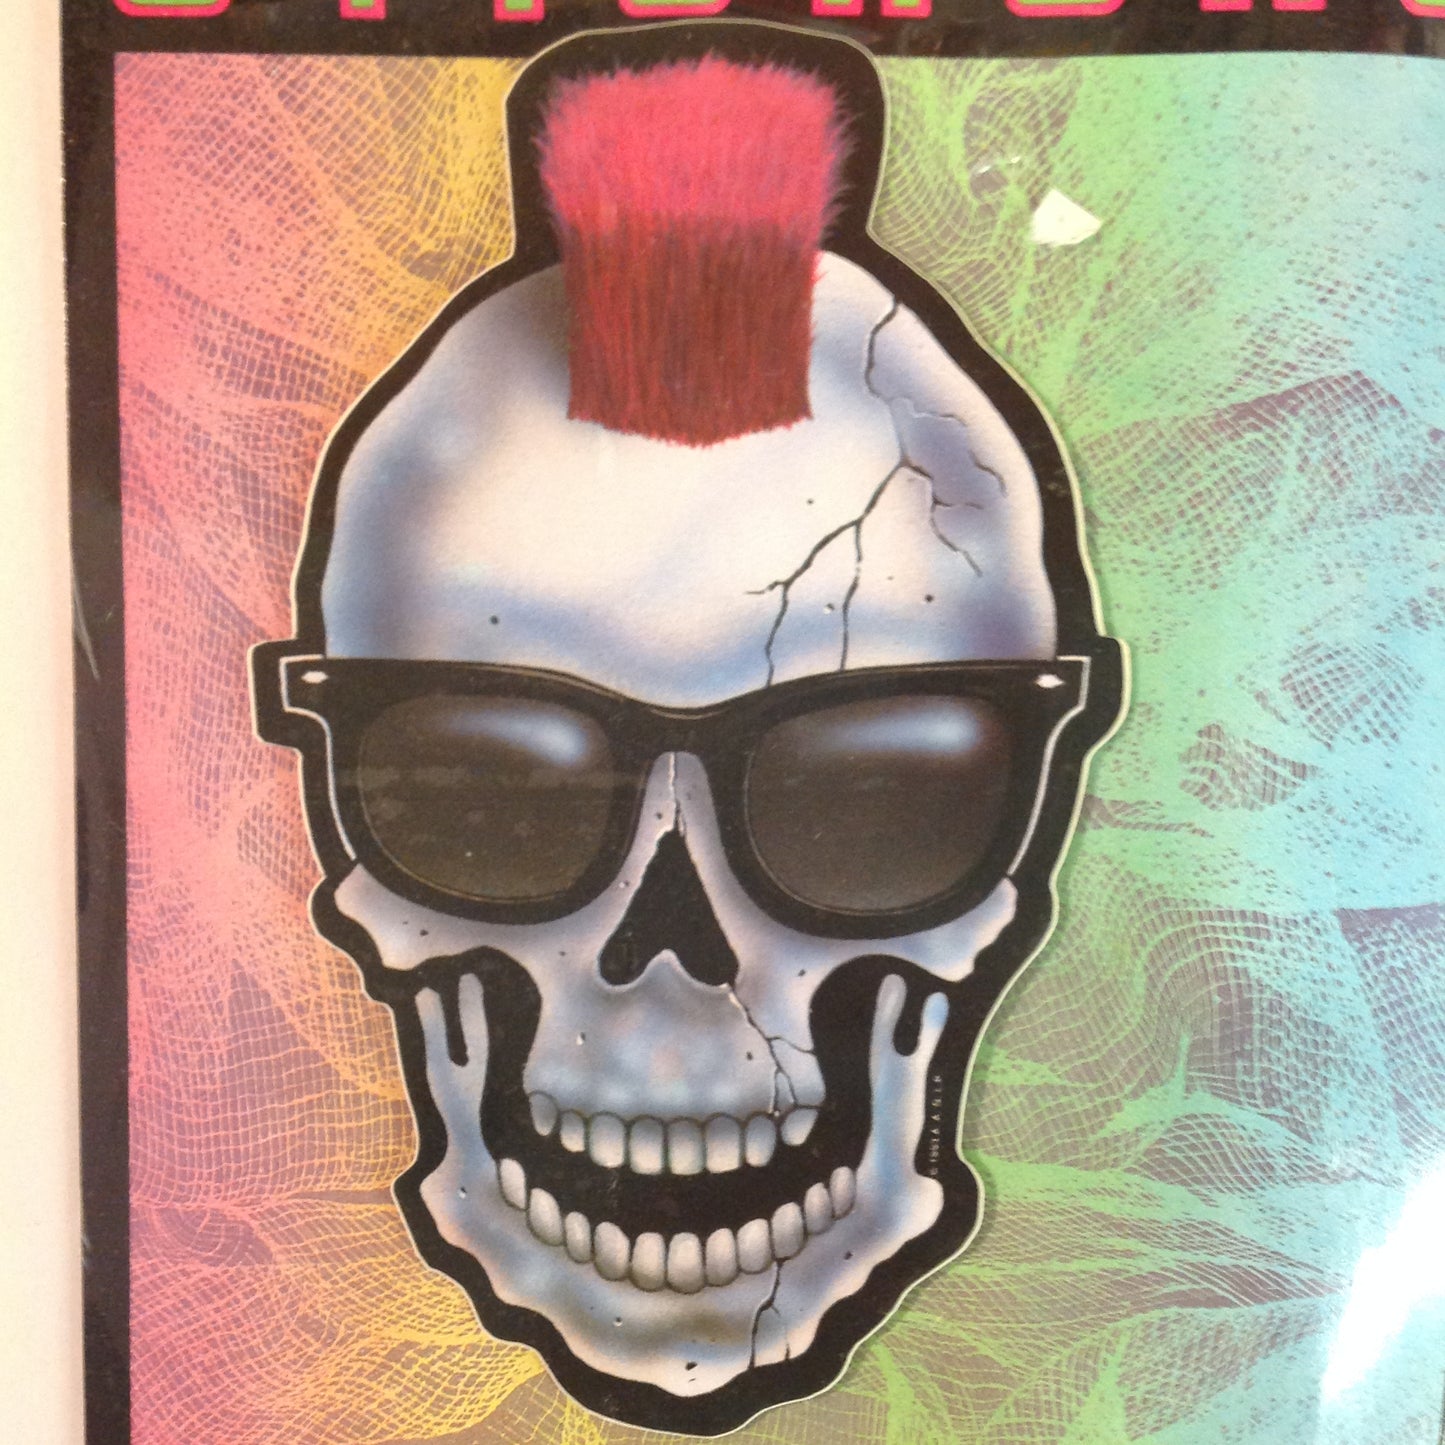 Vintage 1990's NOS Classi-Cal Vinyl Adhesive Sticker Dead Punk Cracked Skull Mohawk in Shades